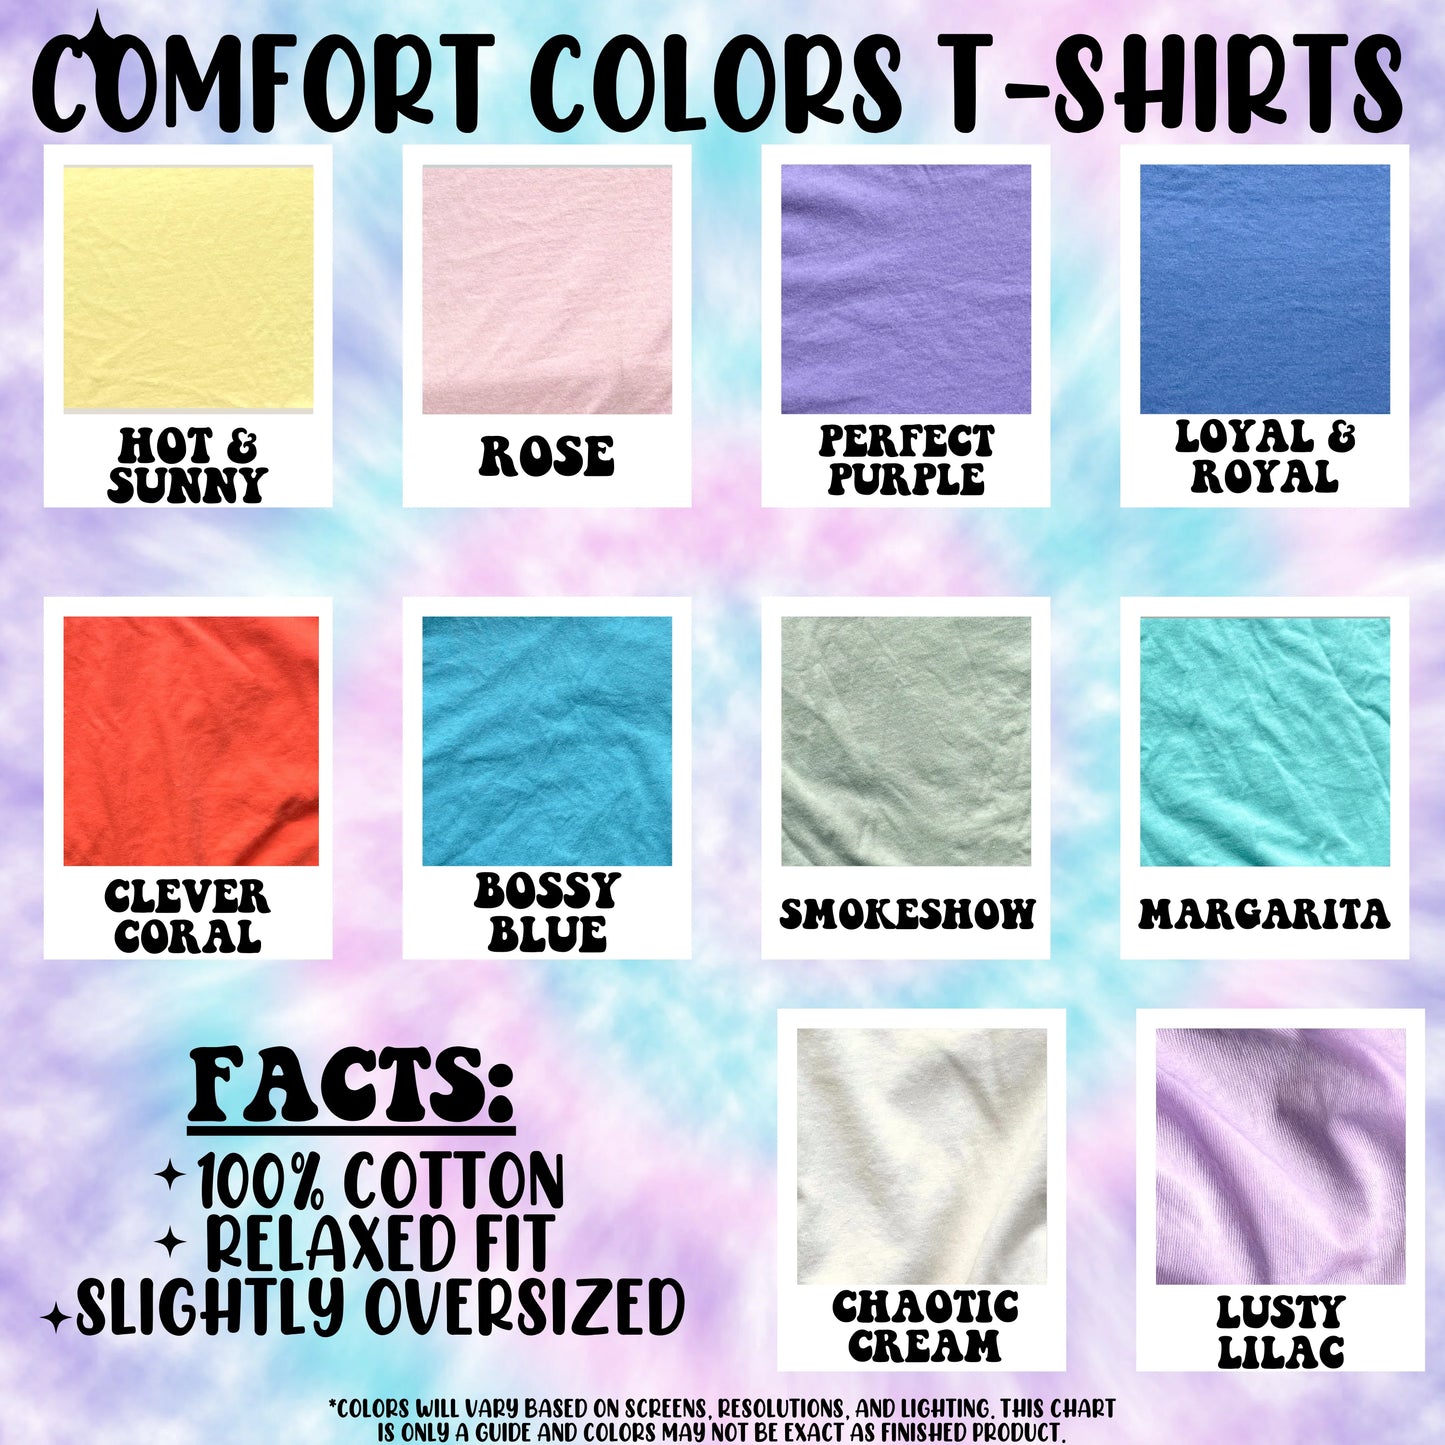 No Need To Name Call Comfort Colors T-Shirt